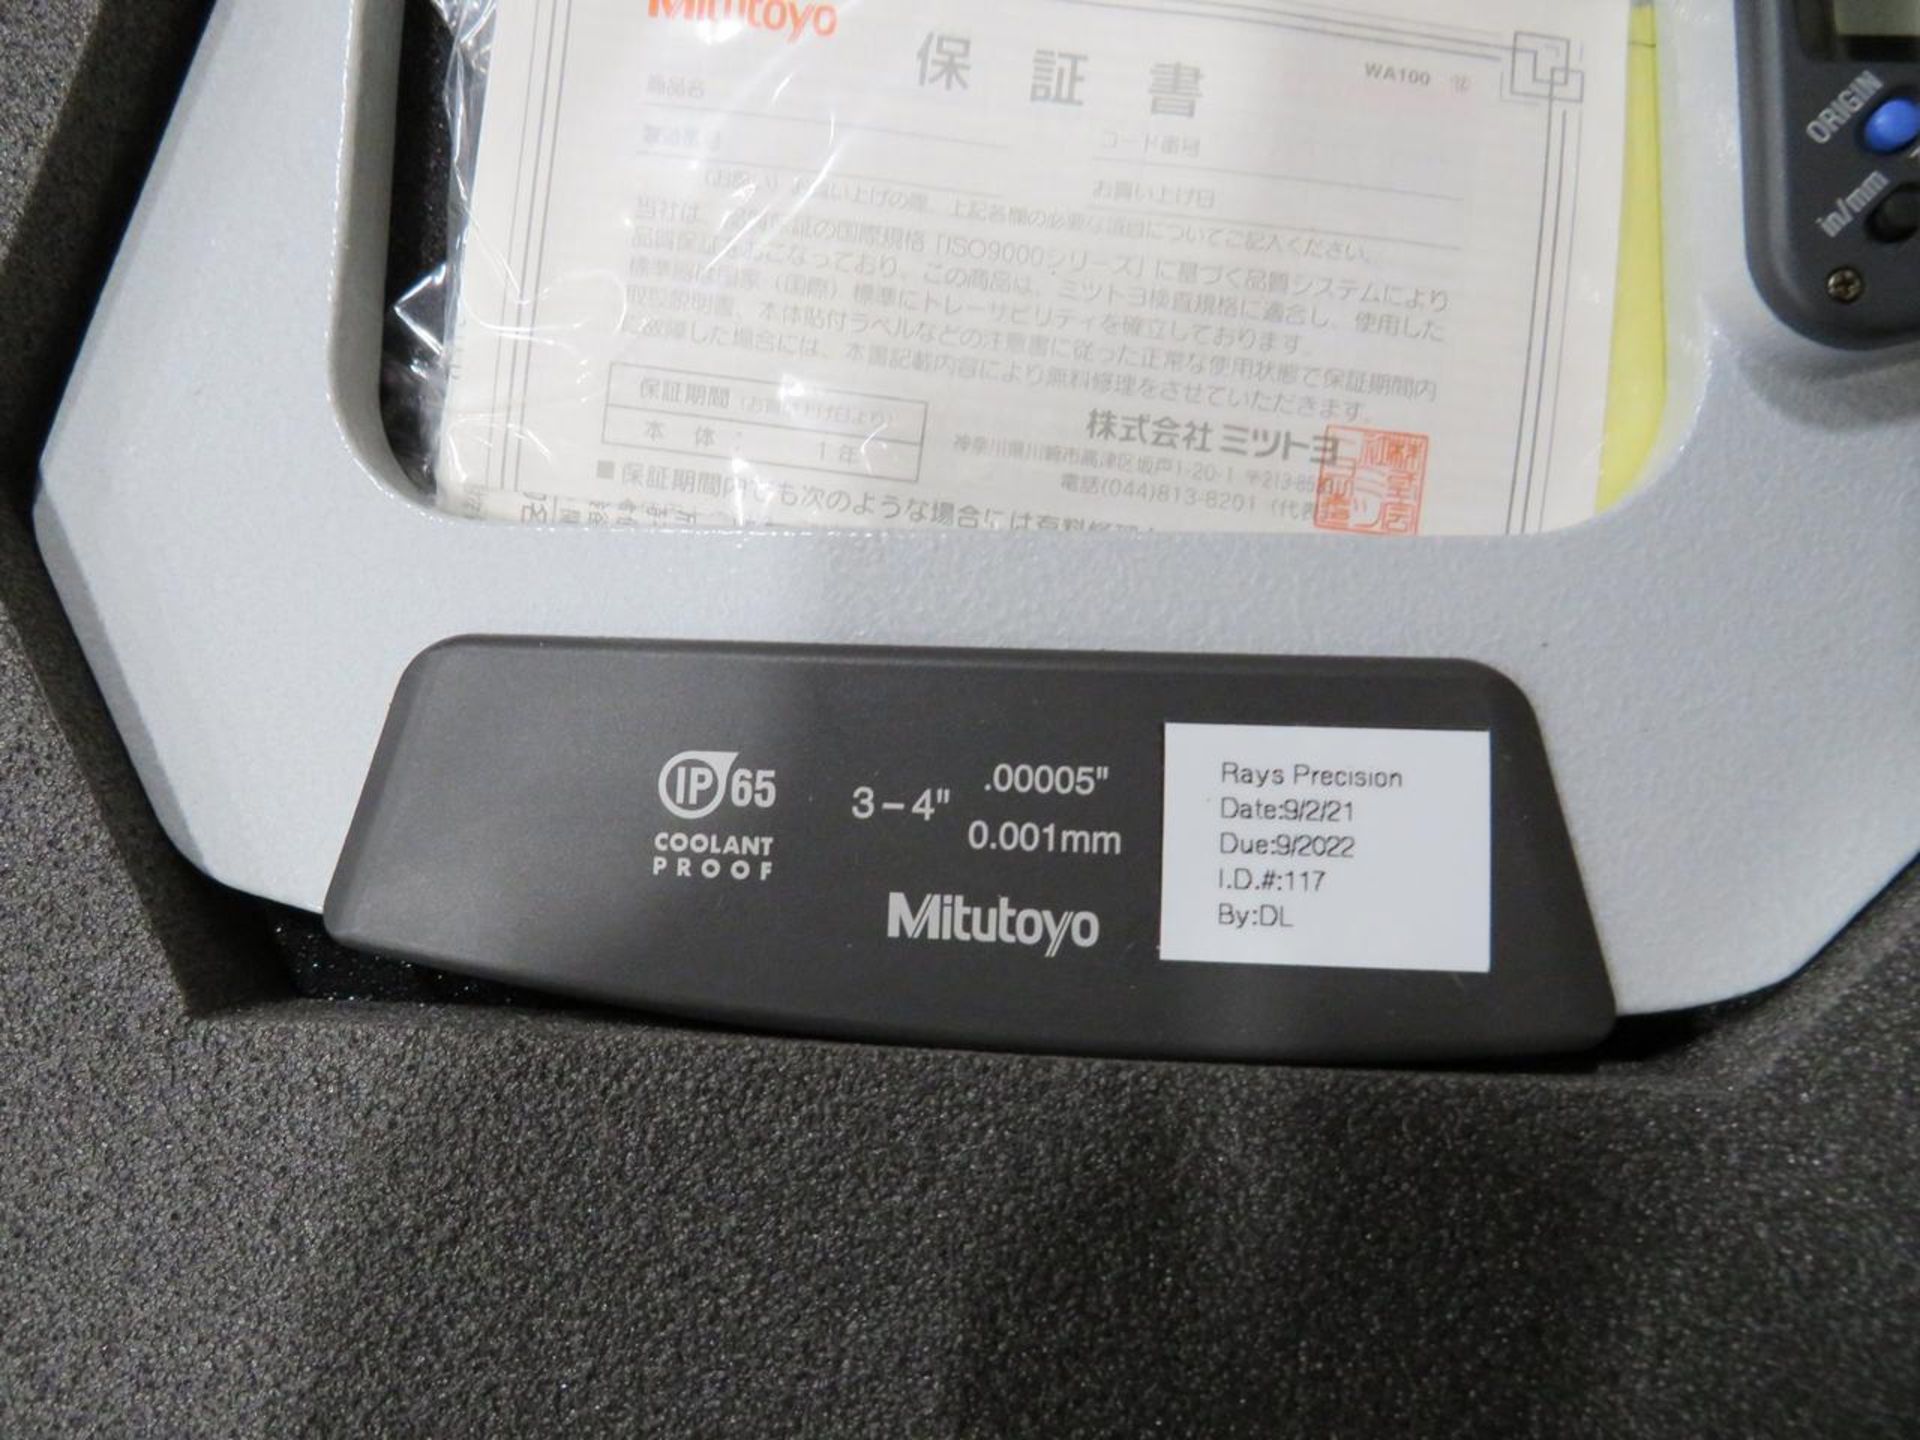 Mitutoyo 293-333 3-4" Digital Micrometer - Image 4 of 6